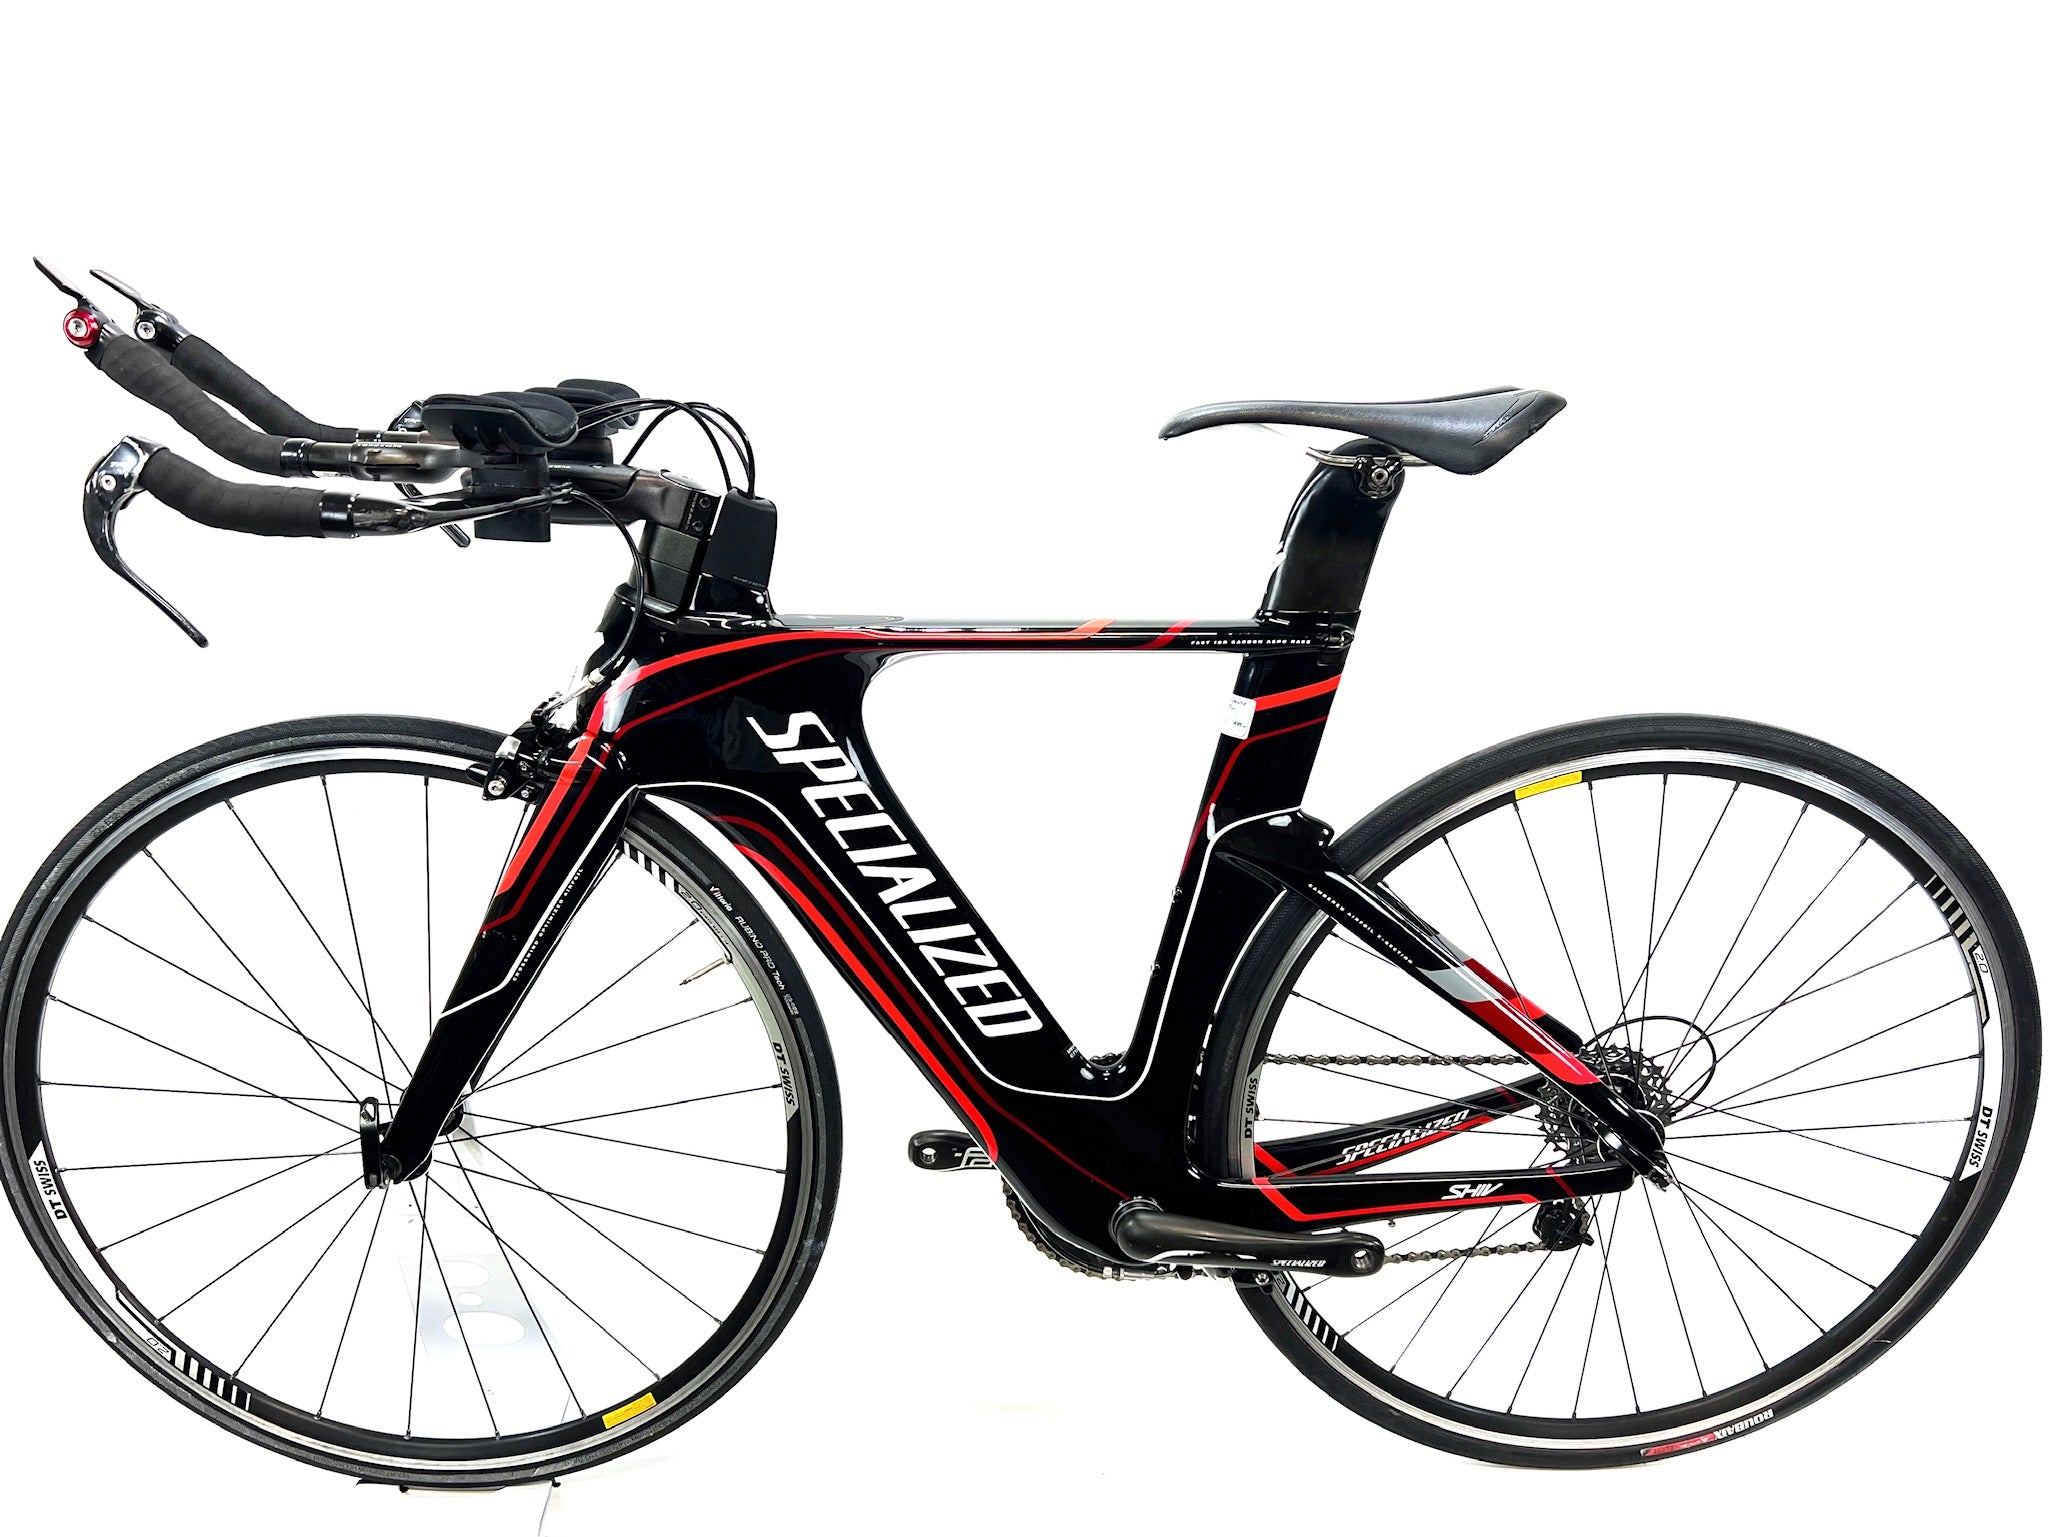 Specialized Shiv Pro, Sram Red, Carbon Triathlon Bike, 19 Pounds! XS, MSRP:$5,500